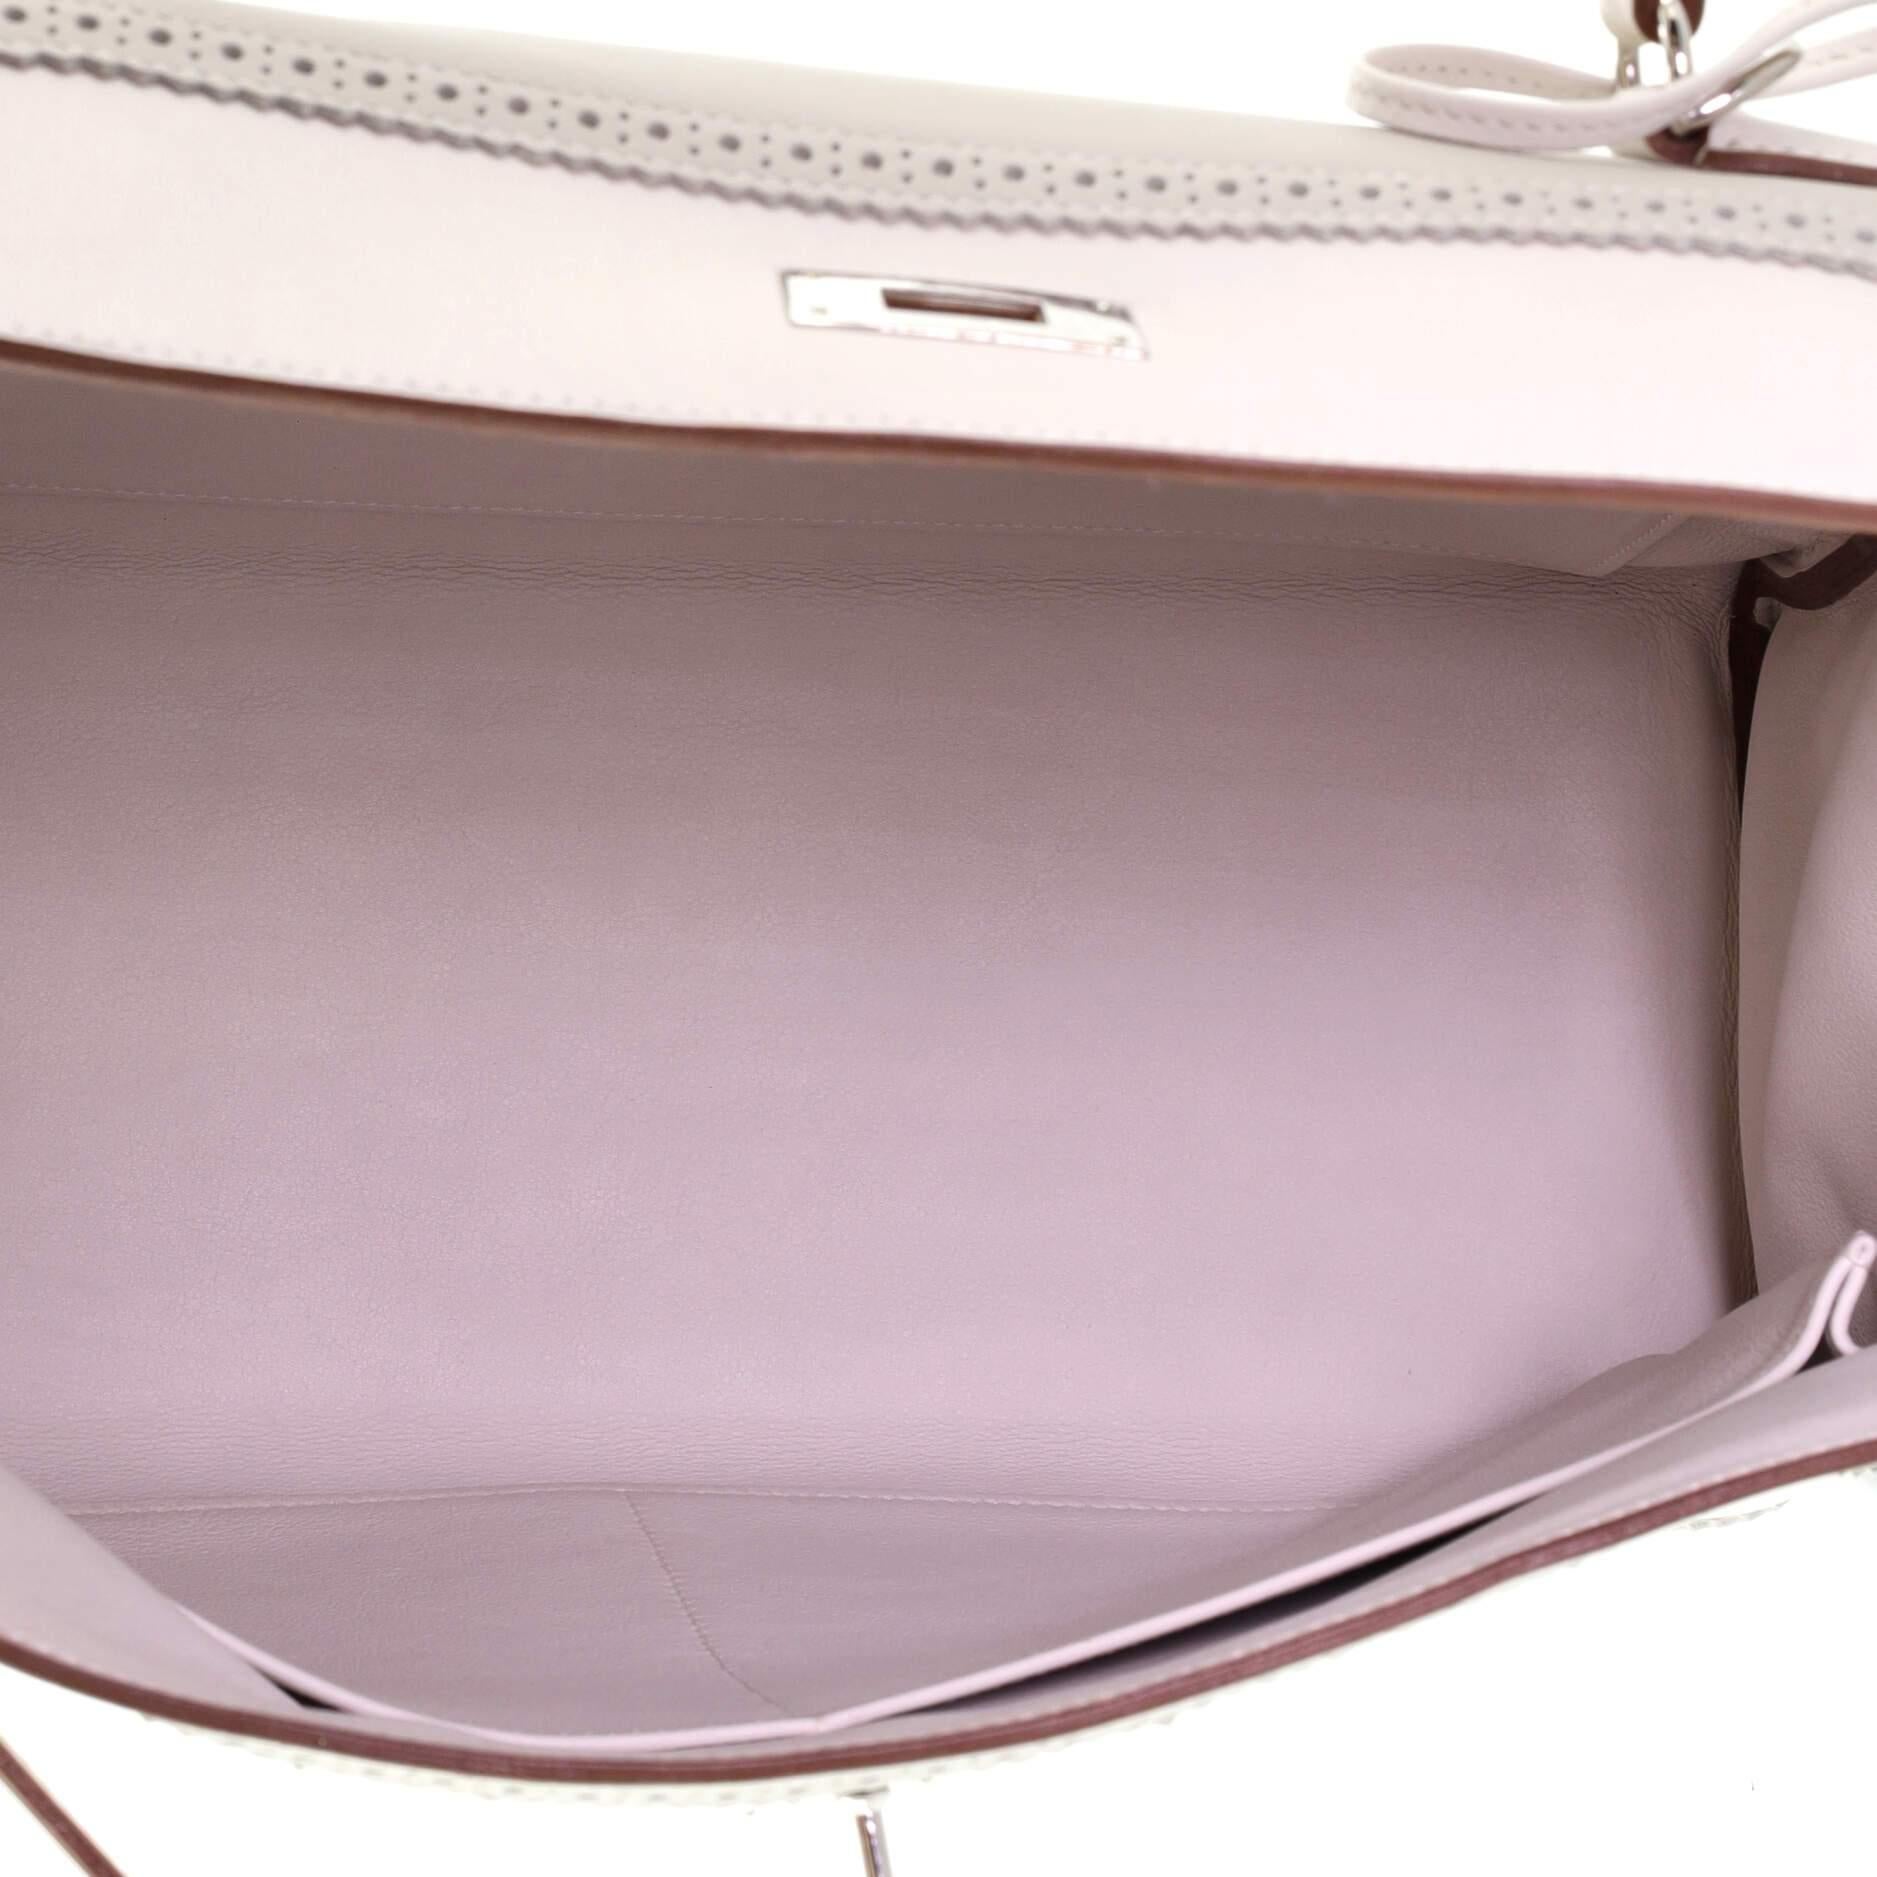 Hermes Kelly Ghillies Handbag Bicolor Swift with Palladium Hardware 35 3